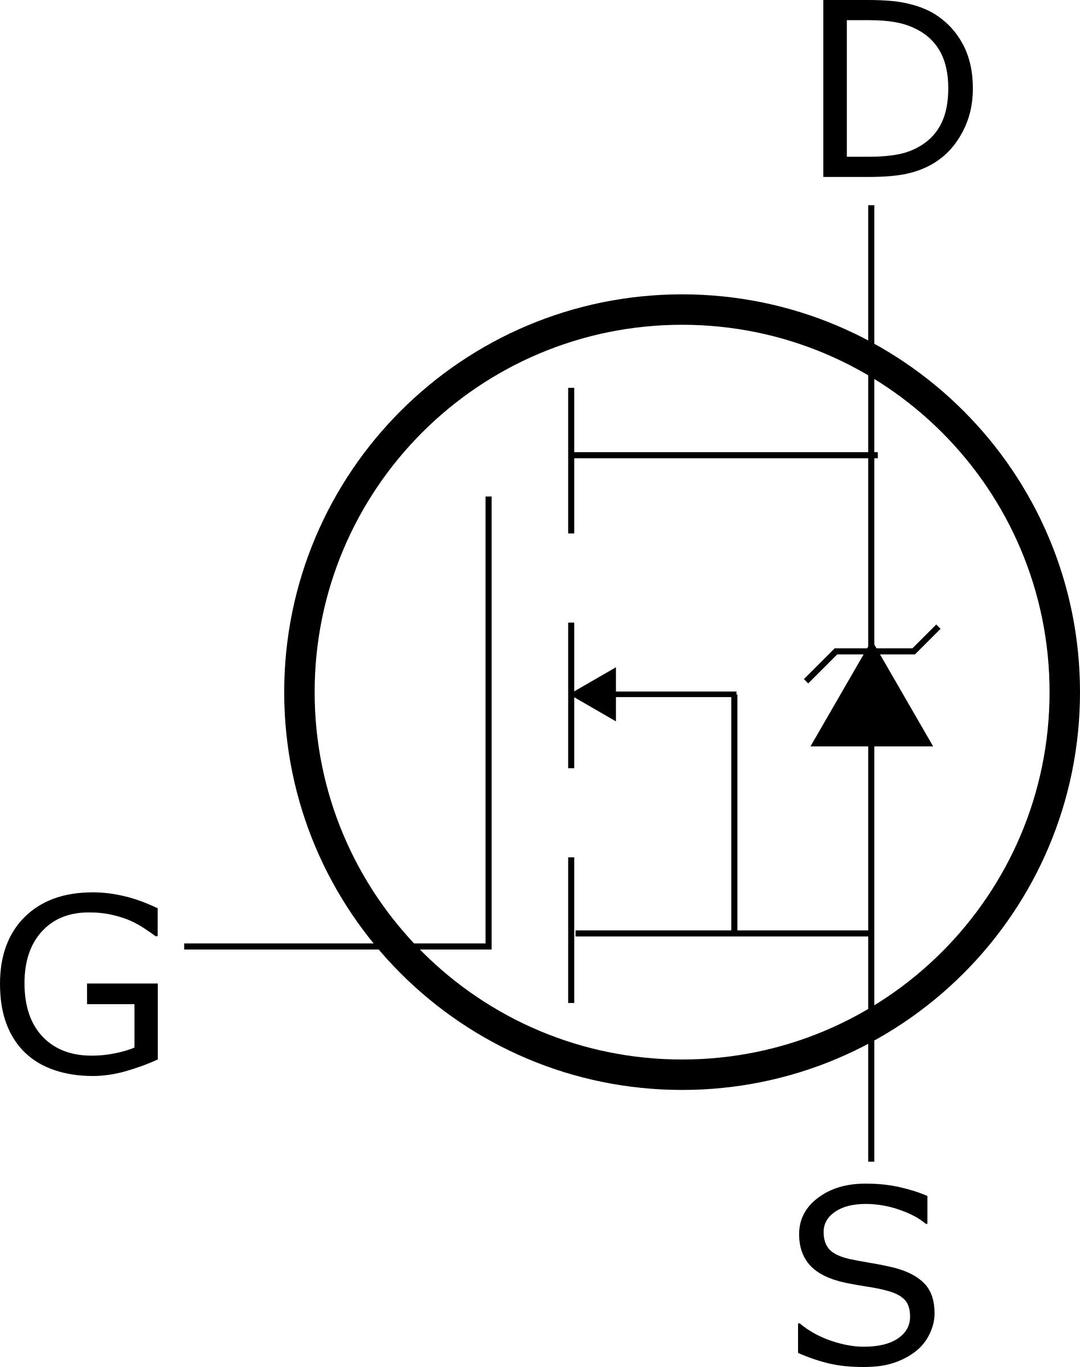 N-Ch. FET Schematic Symbol png transparent